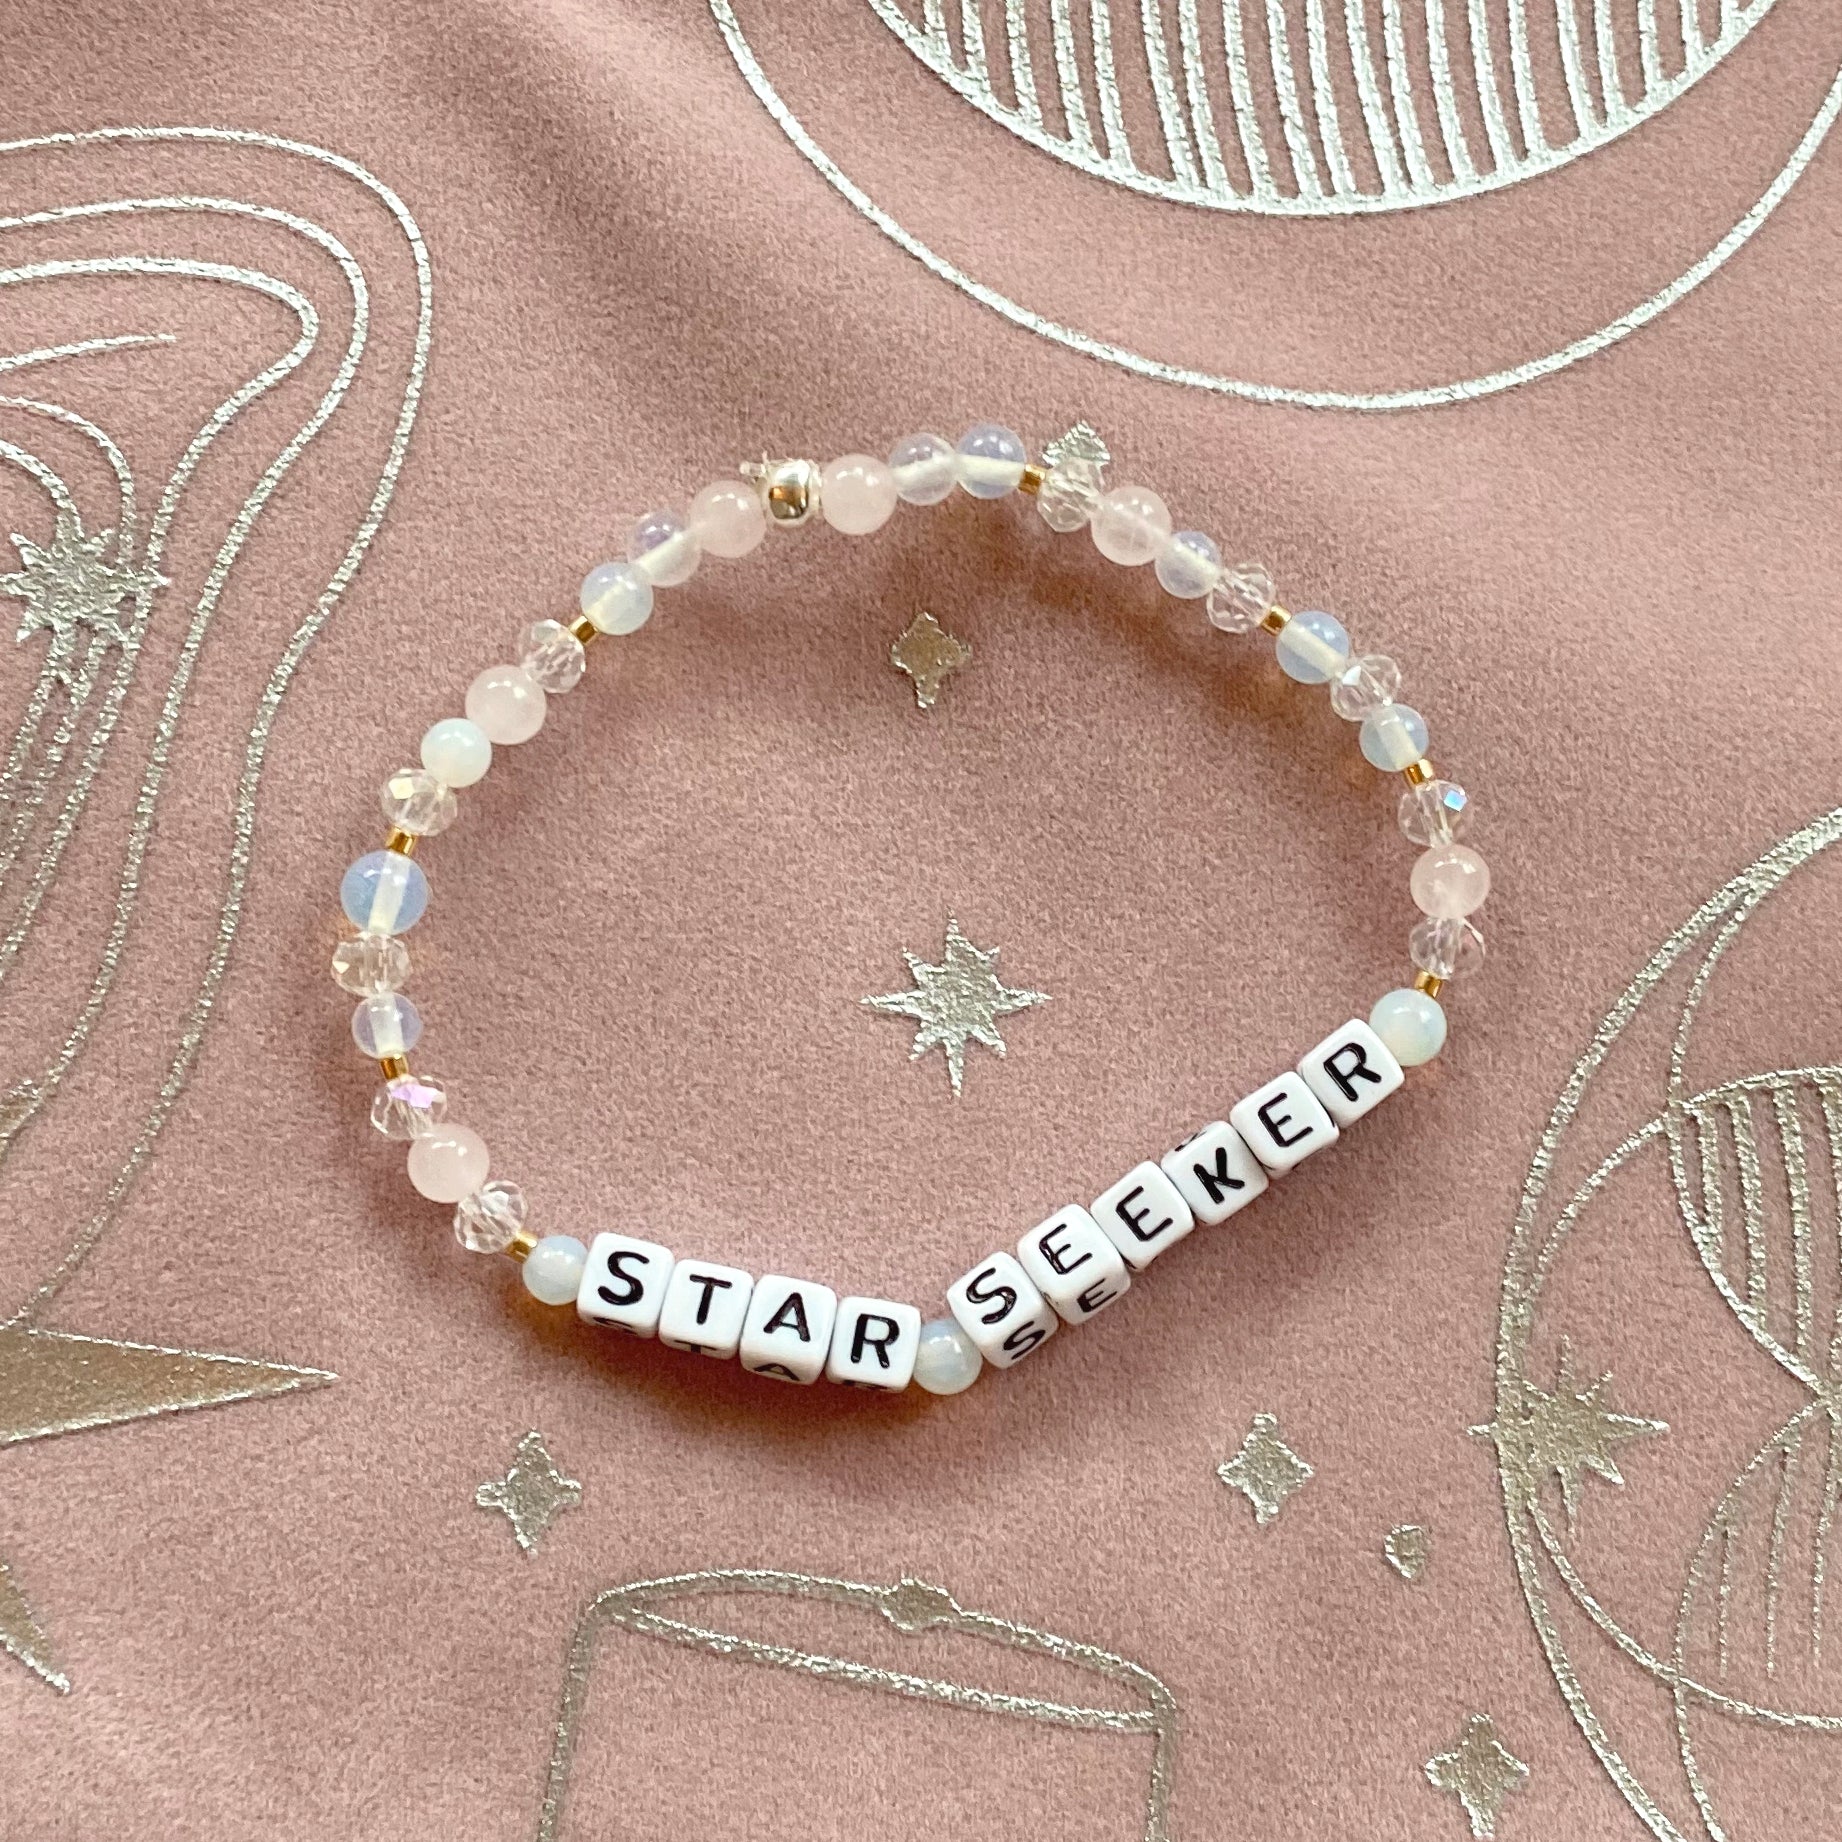 Star Seeker Gemstone Letter Bracelet